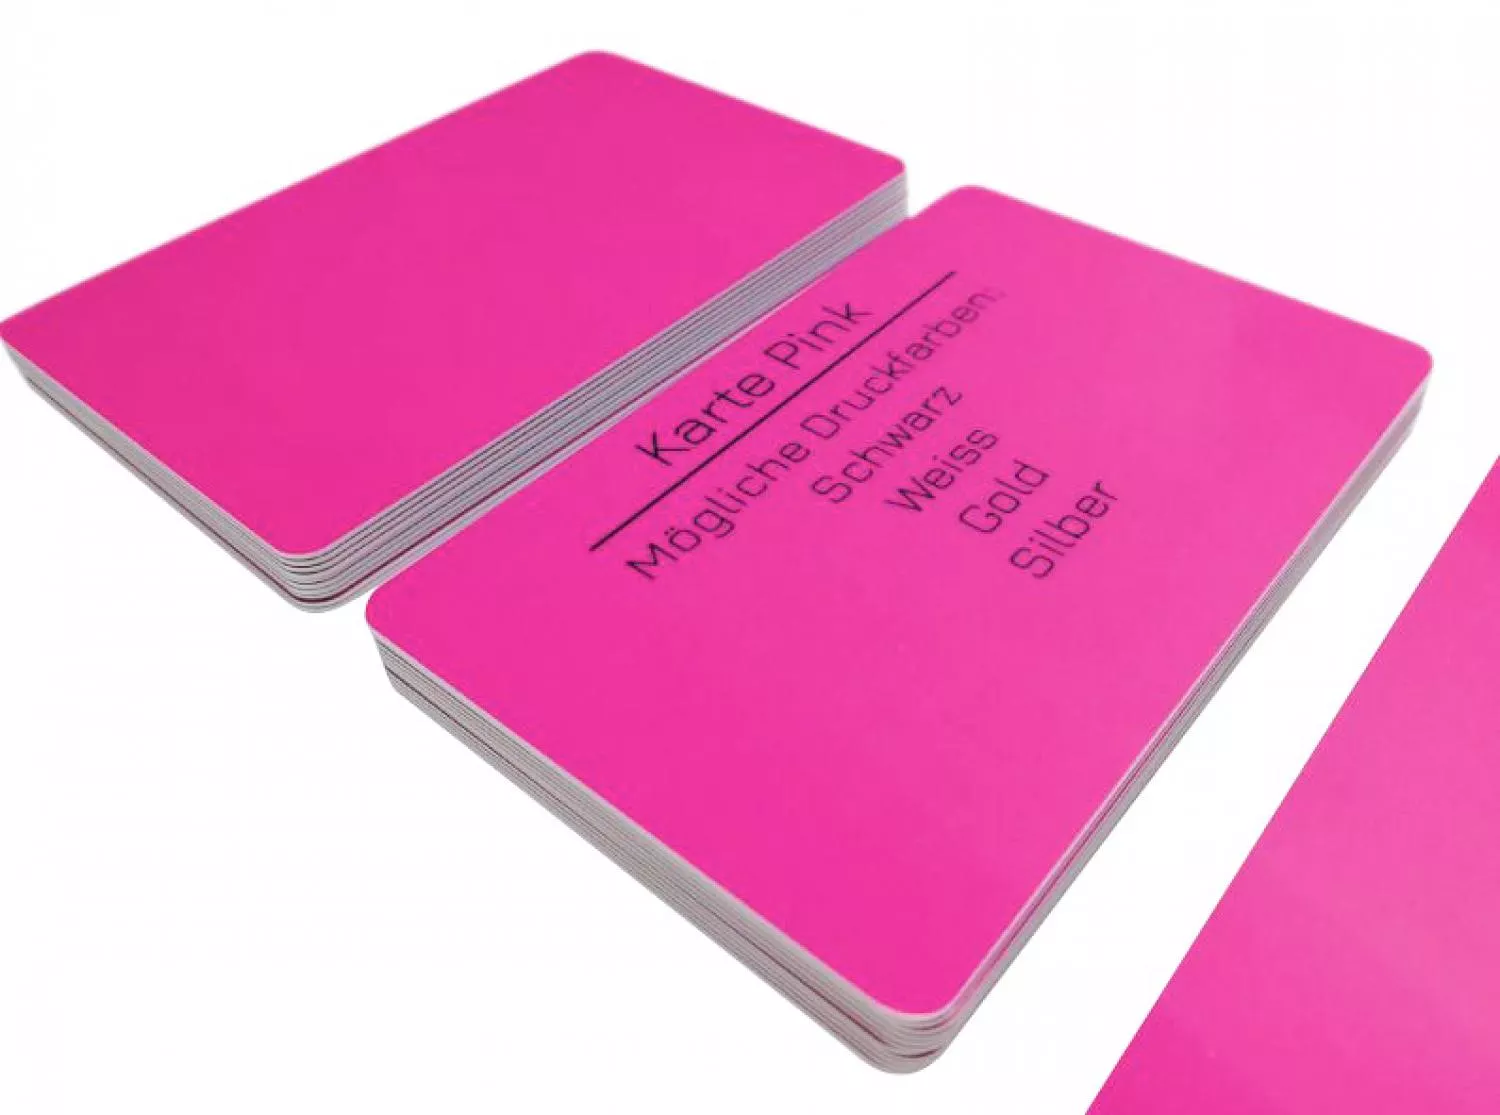 Plastikkarte pink mit Unterschriftfeld